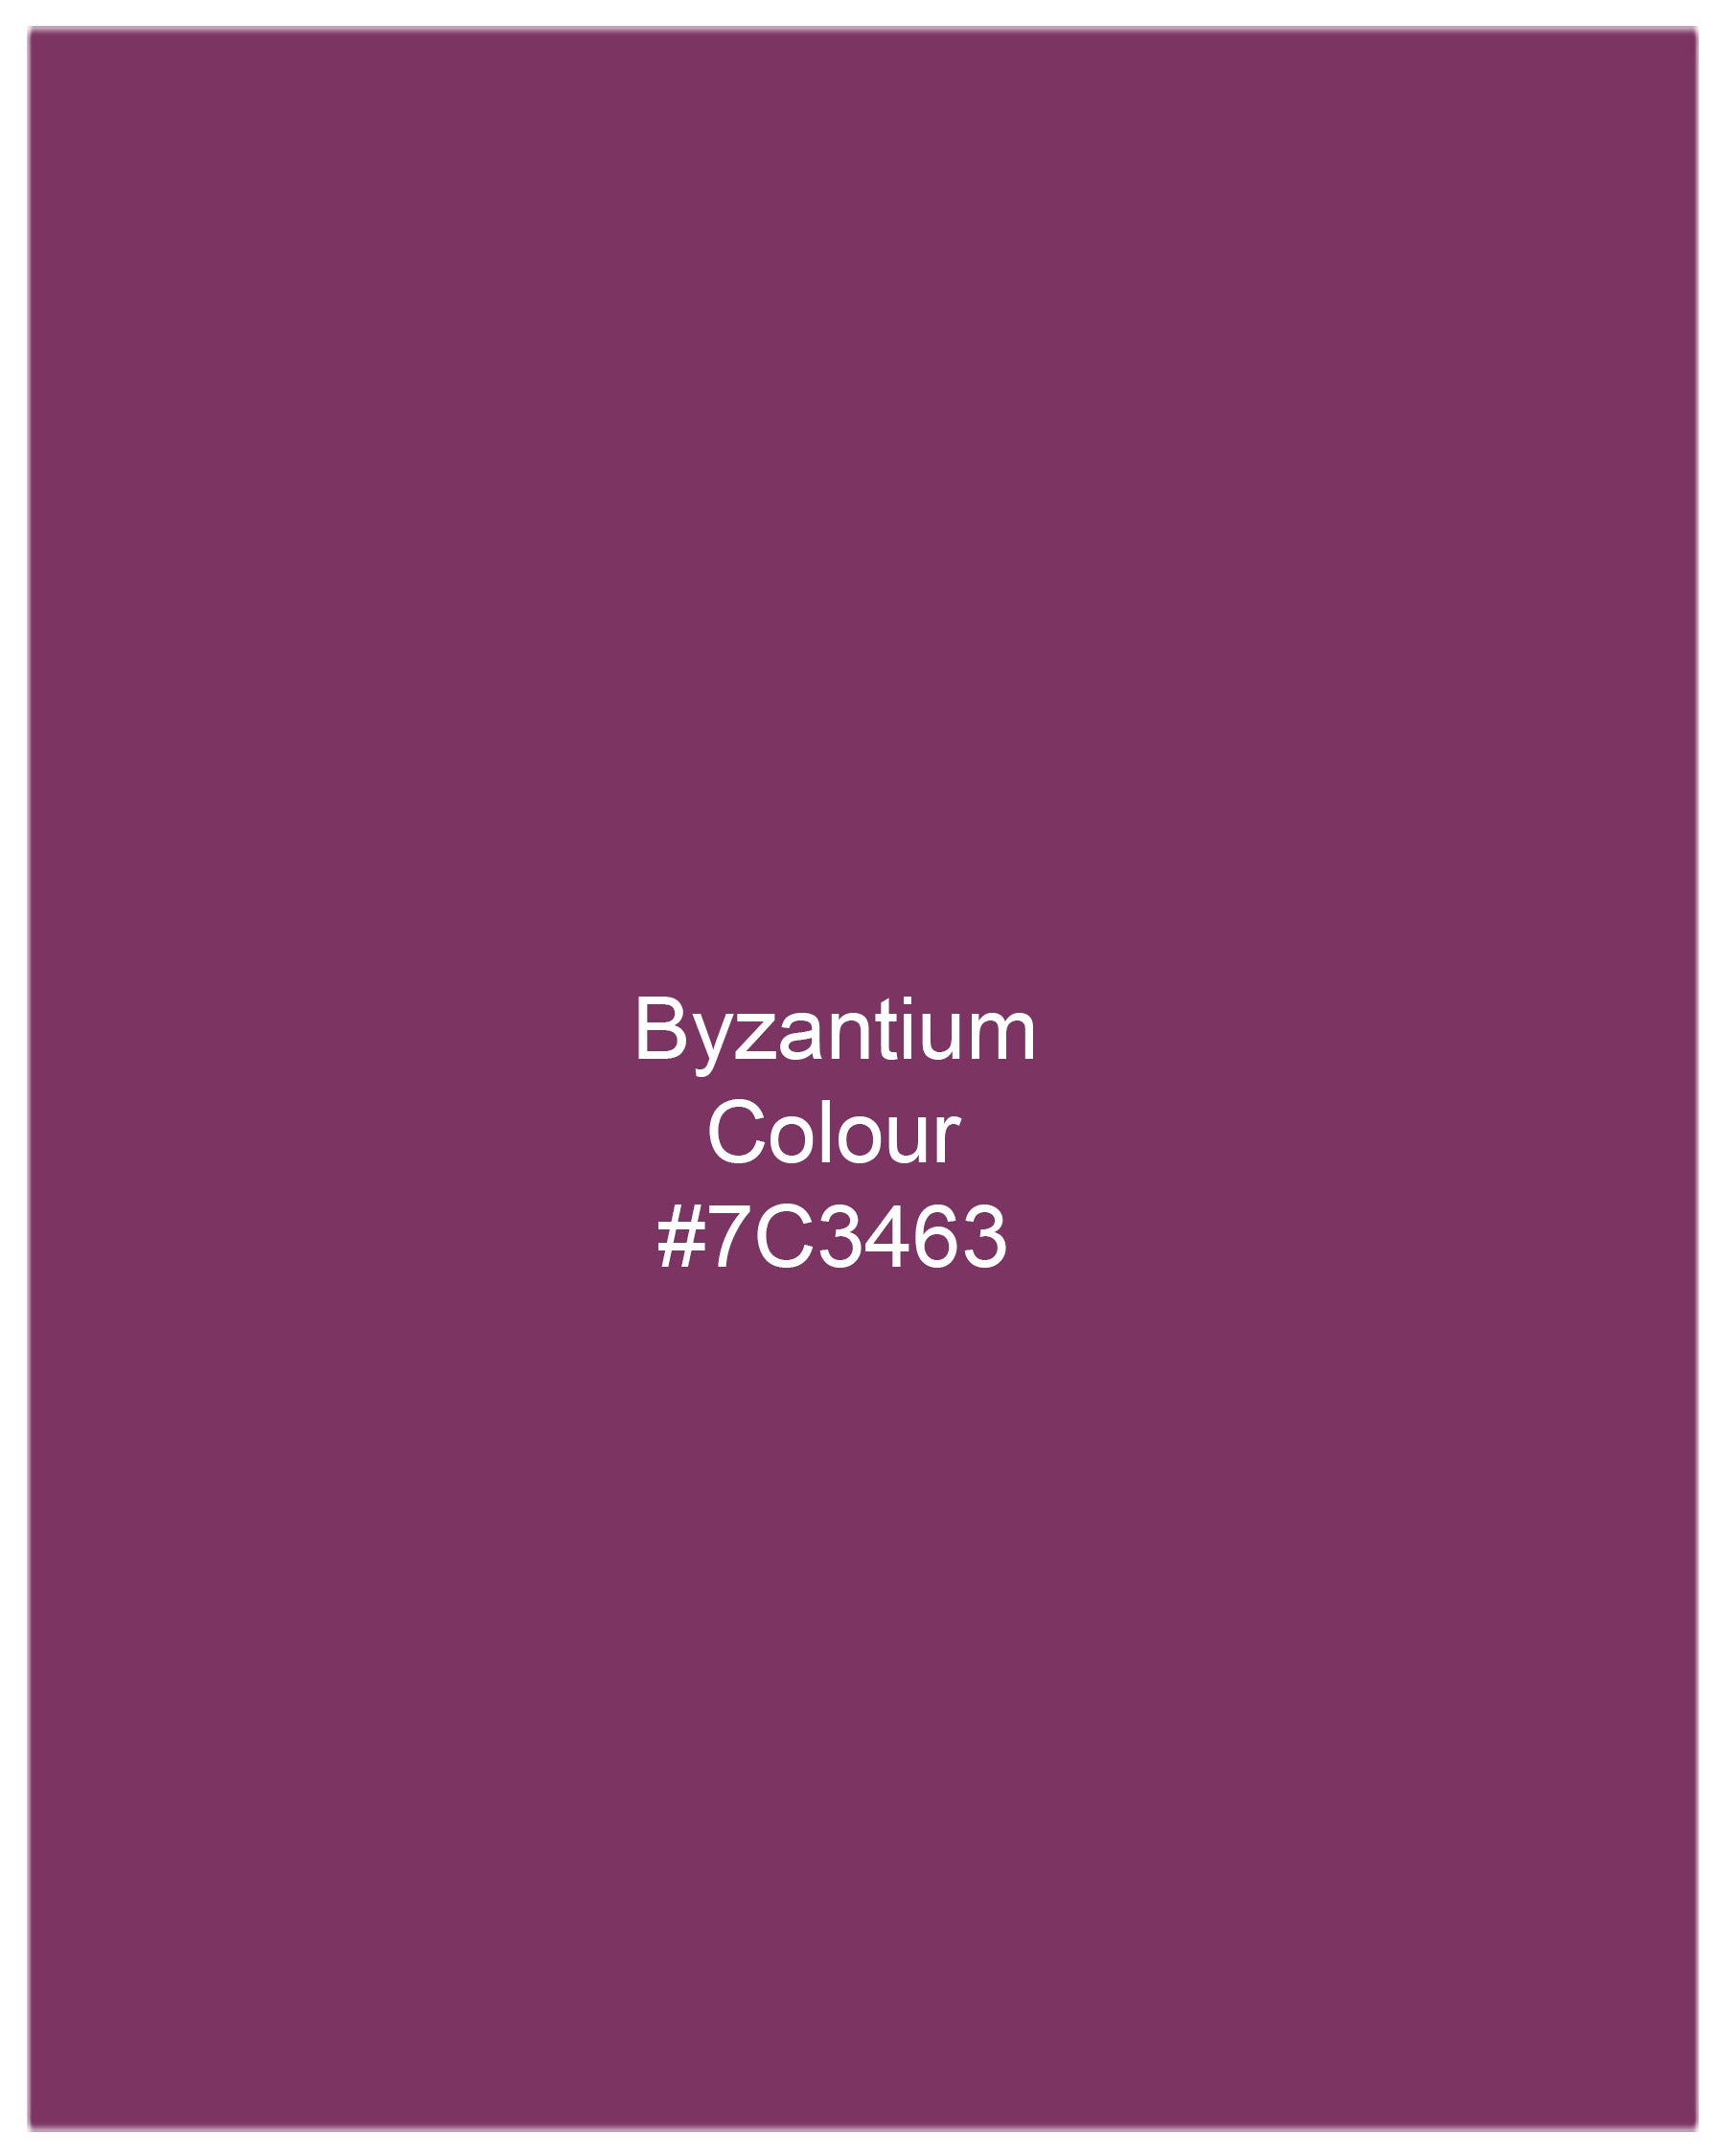 Byzantium Purple Chambray Textured Two-Tone Premium Cotton Shirt 7697-BLE-38, 7697-BLE-H-38, 7697-BLE-39,7697-BLE-H-39, 7697-BLE-40, 7697-BLE-H-40, 7697-BLE-42, 7697-BLE-H-42, 7697-BLE-44, 7697-BLE-H-44, 7697-BLE-46, 7697-BLE-H-46, 7697-BLE-48, 7697-BLE-H-48, 7697-BLE-50, 7697-BLE-H-50, 7697-BLE-52, 7697-BLE-H-52